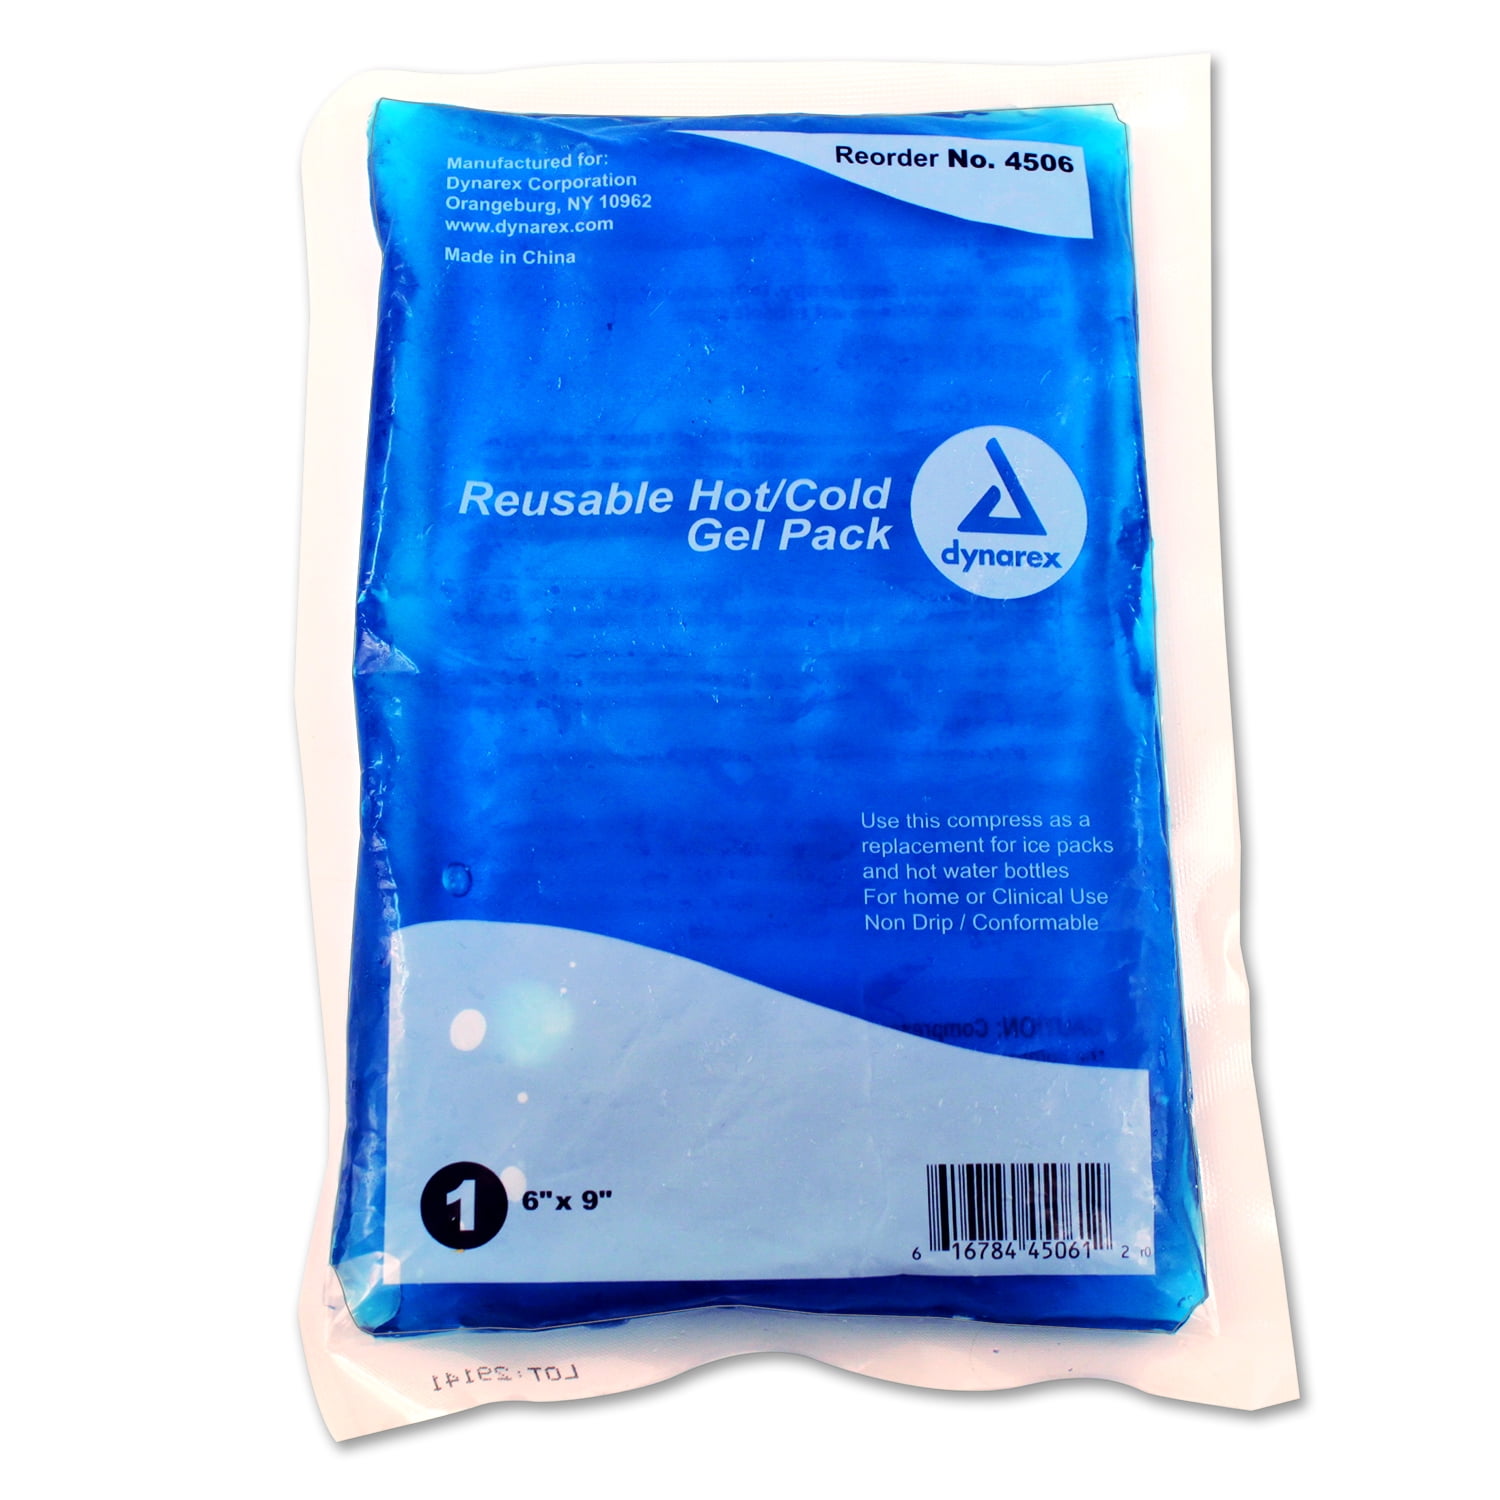 reusable gel cold packs